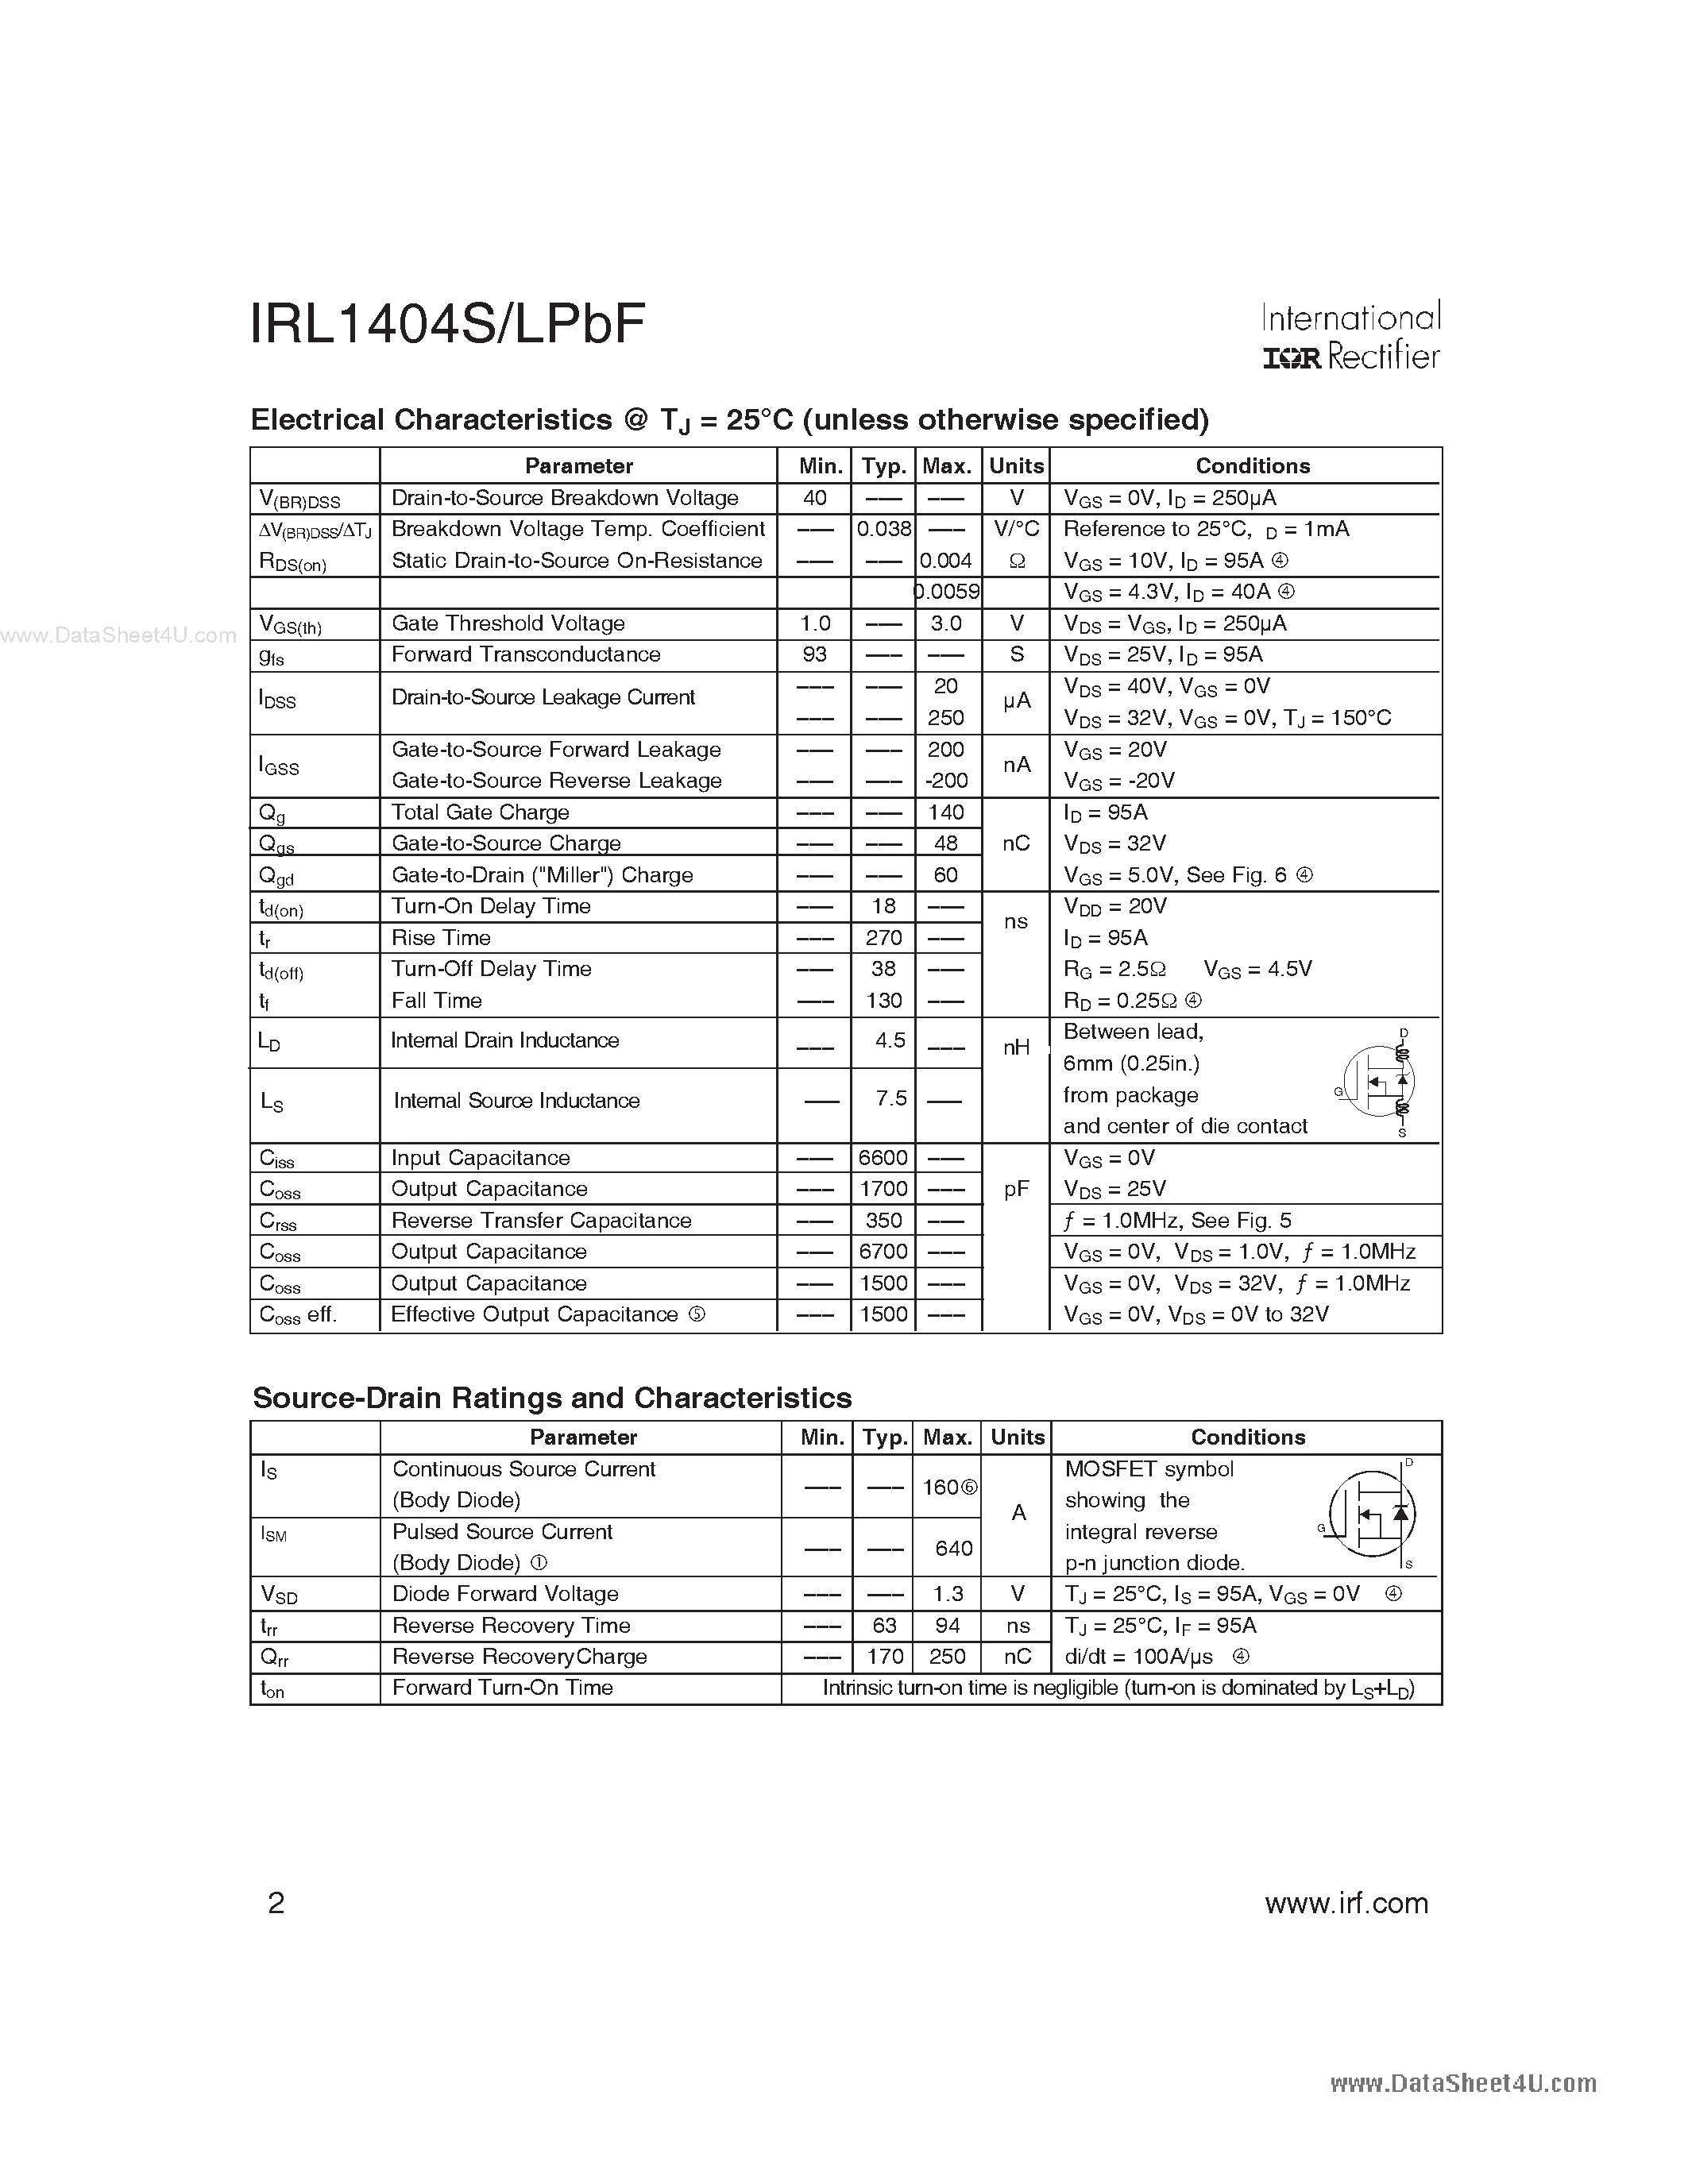 Даташит IRL1404LPBF - Power MOSFET страница 2